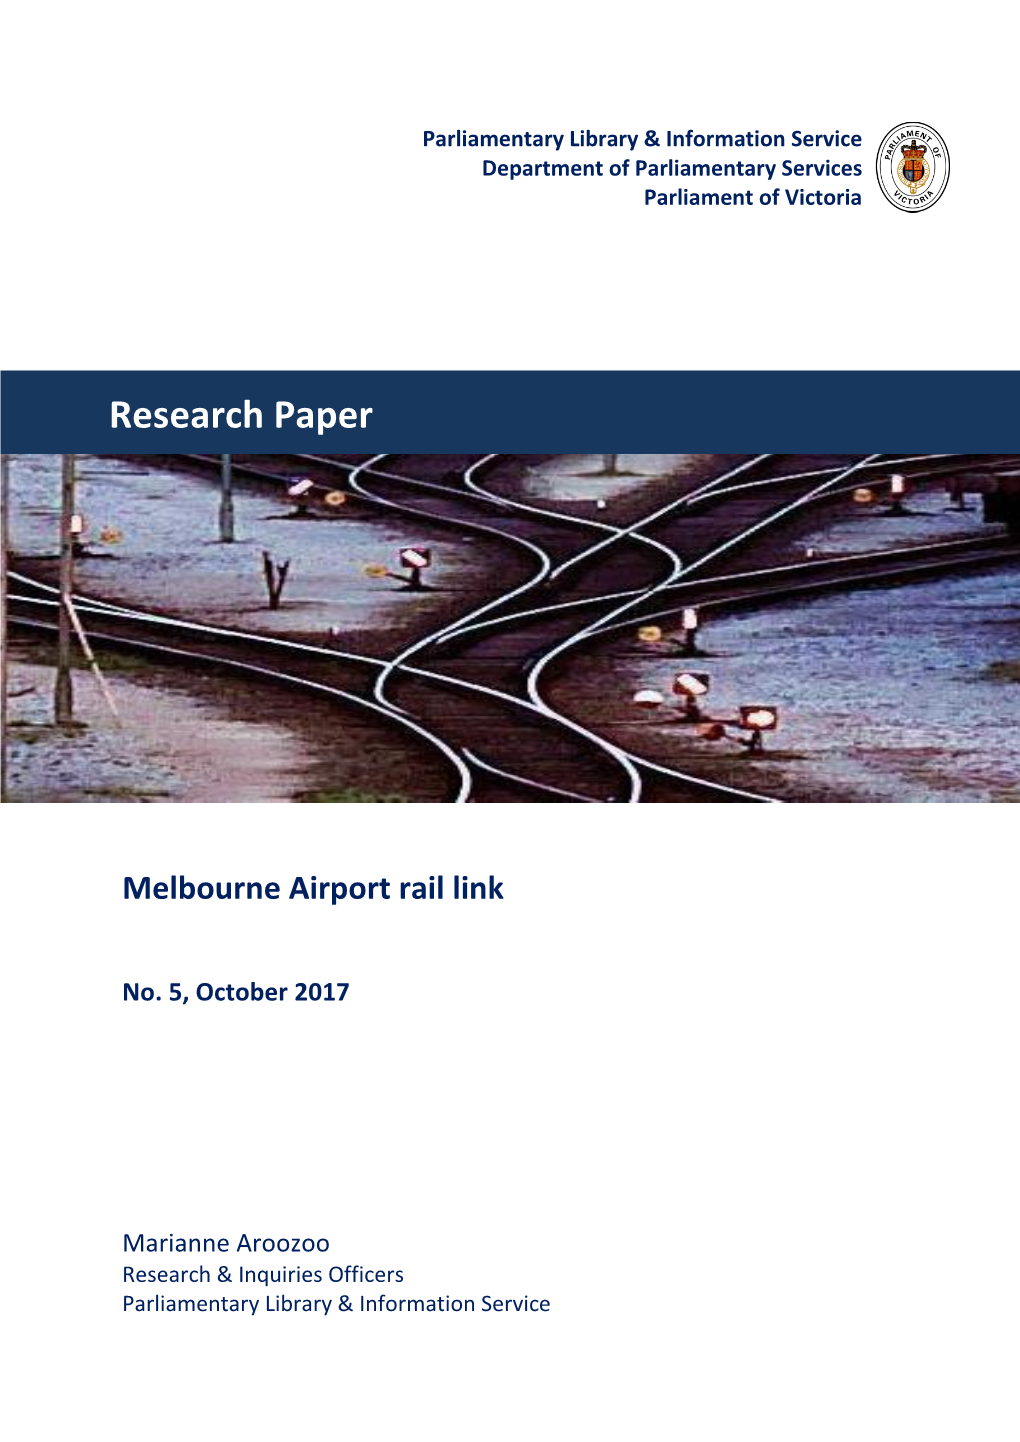 Melbourne Airport Rail Link